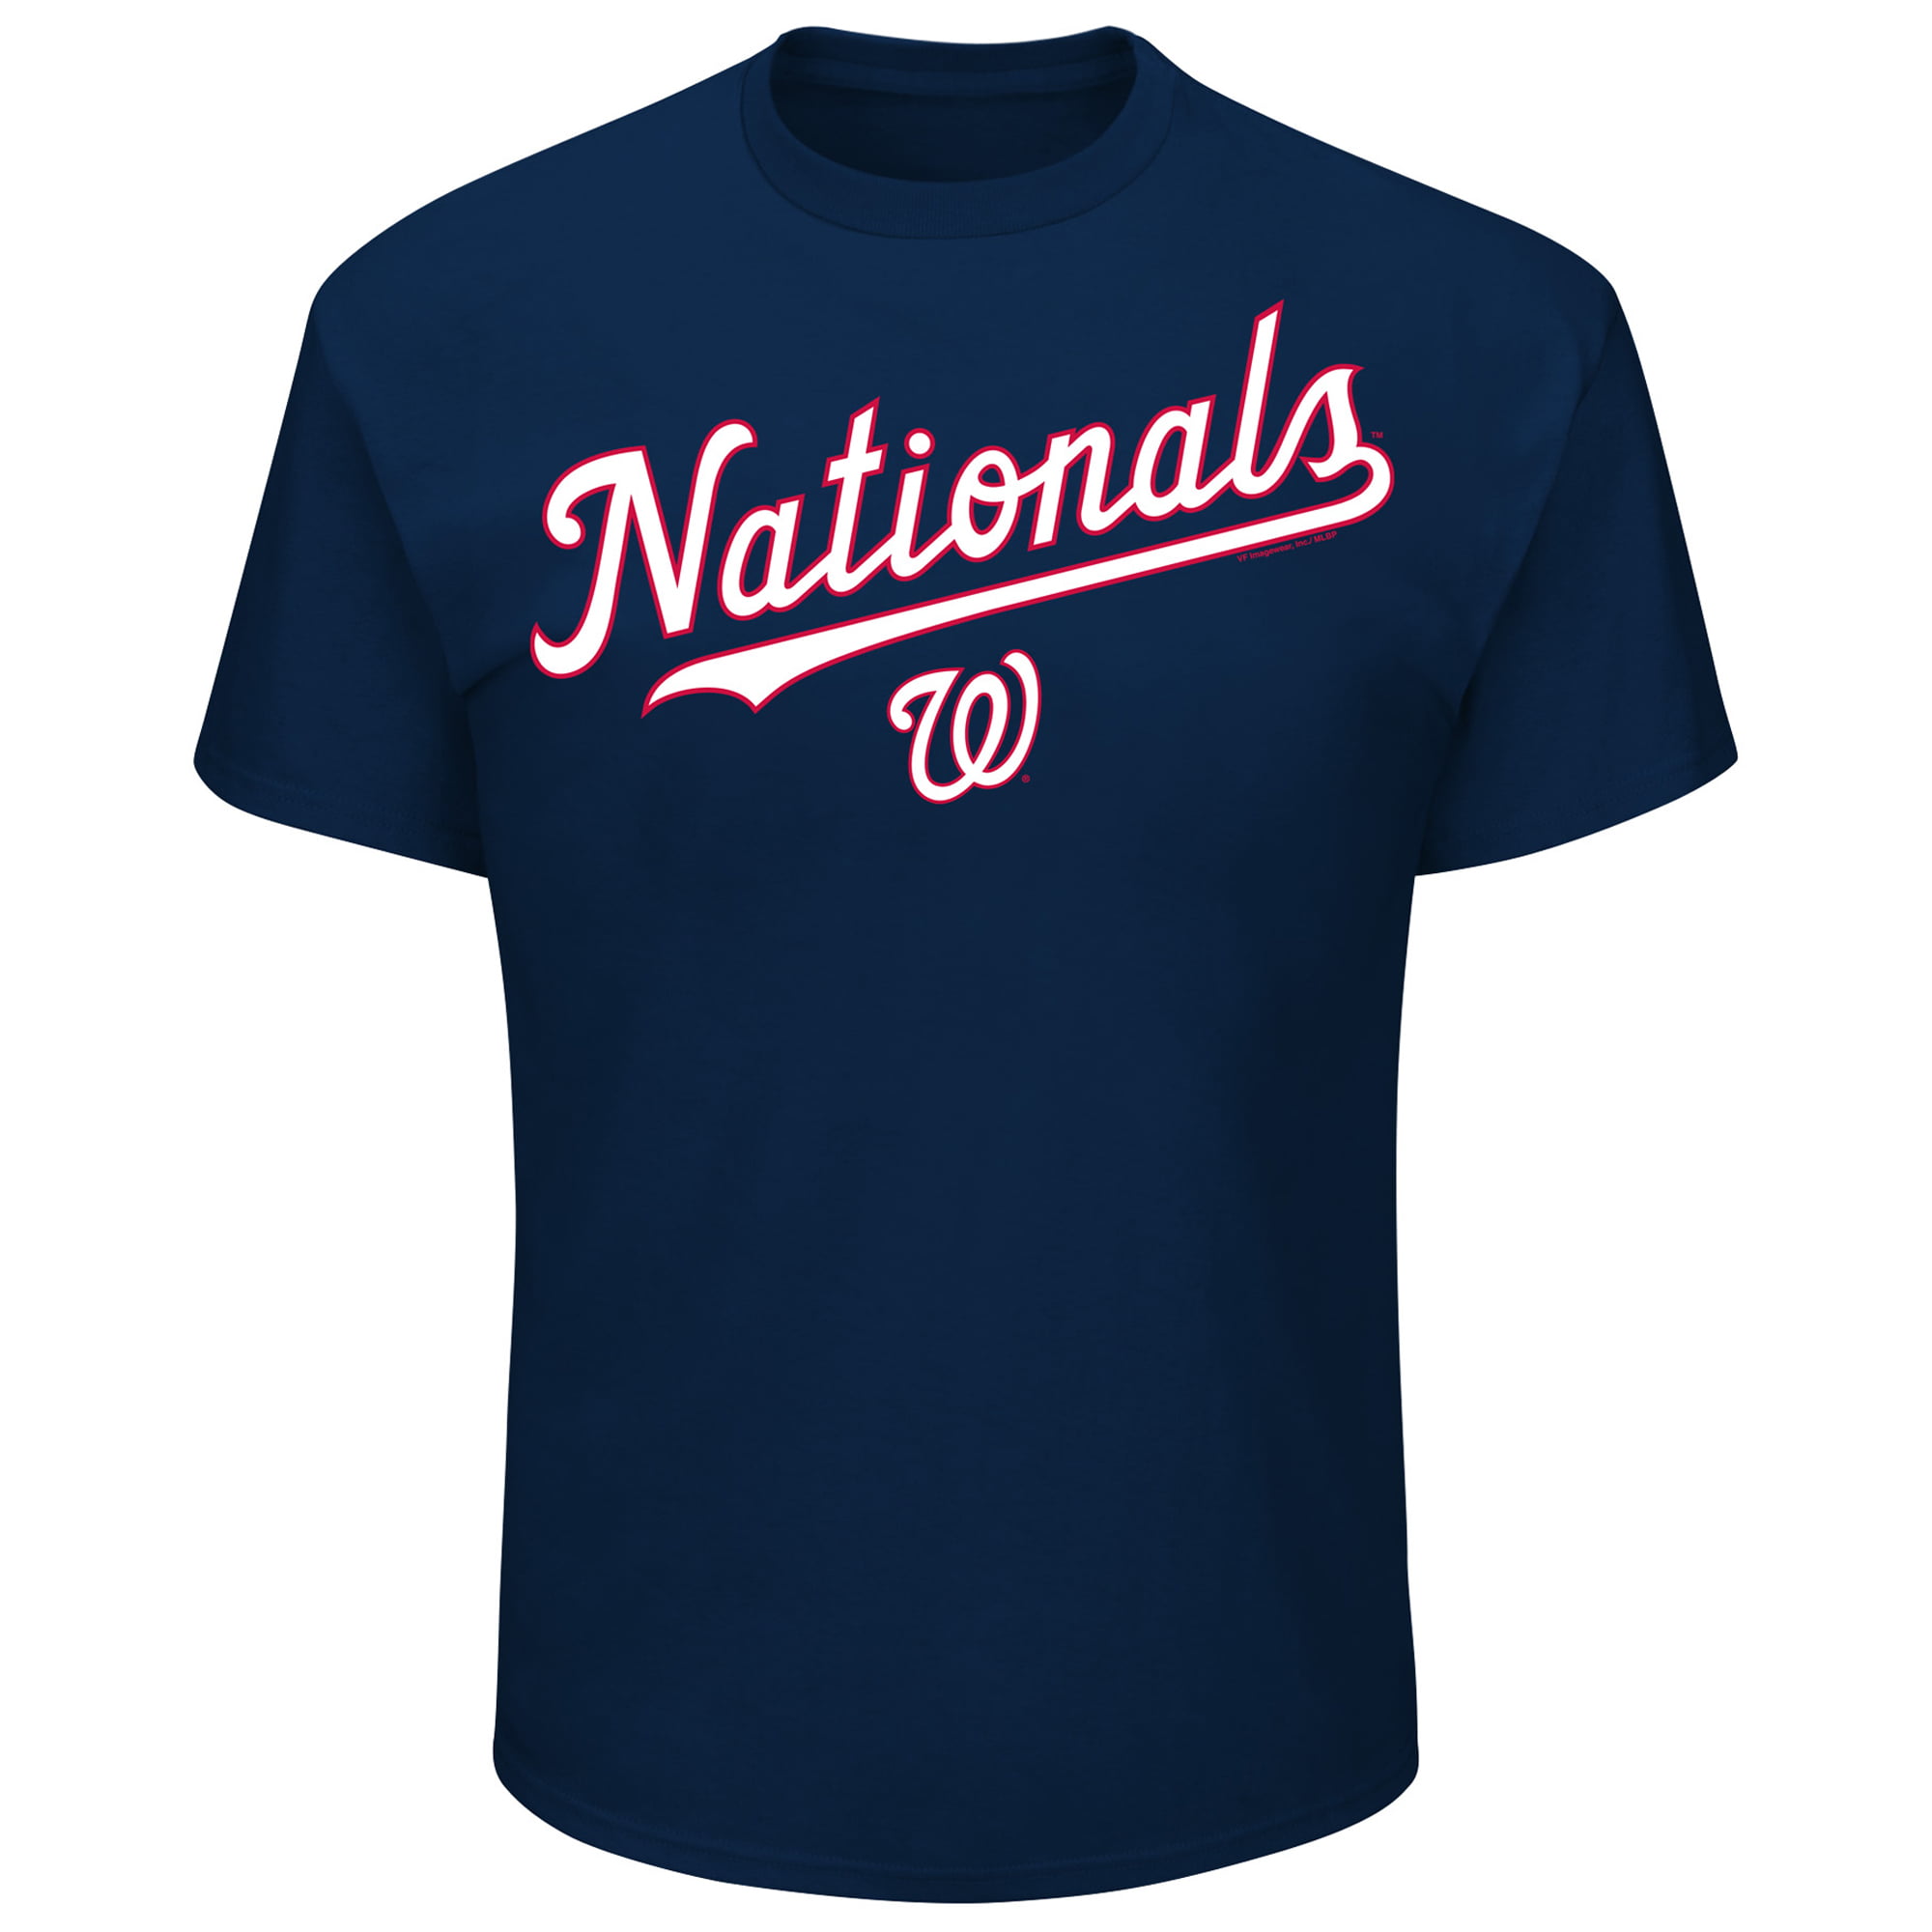 nationals tshirts